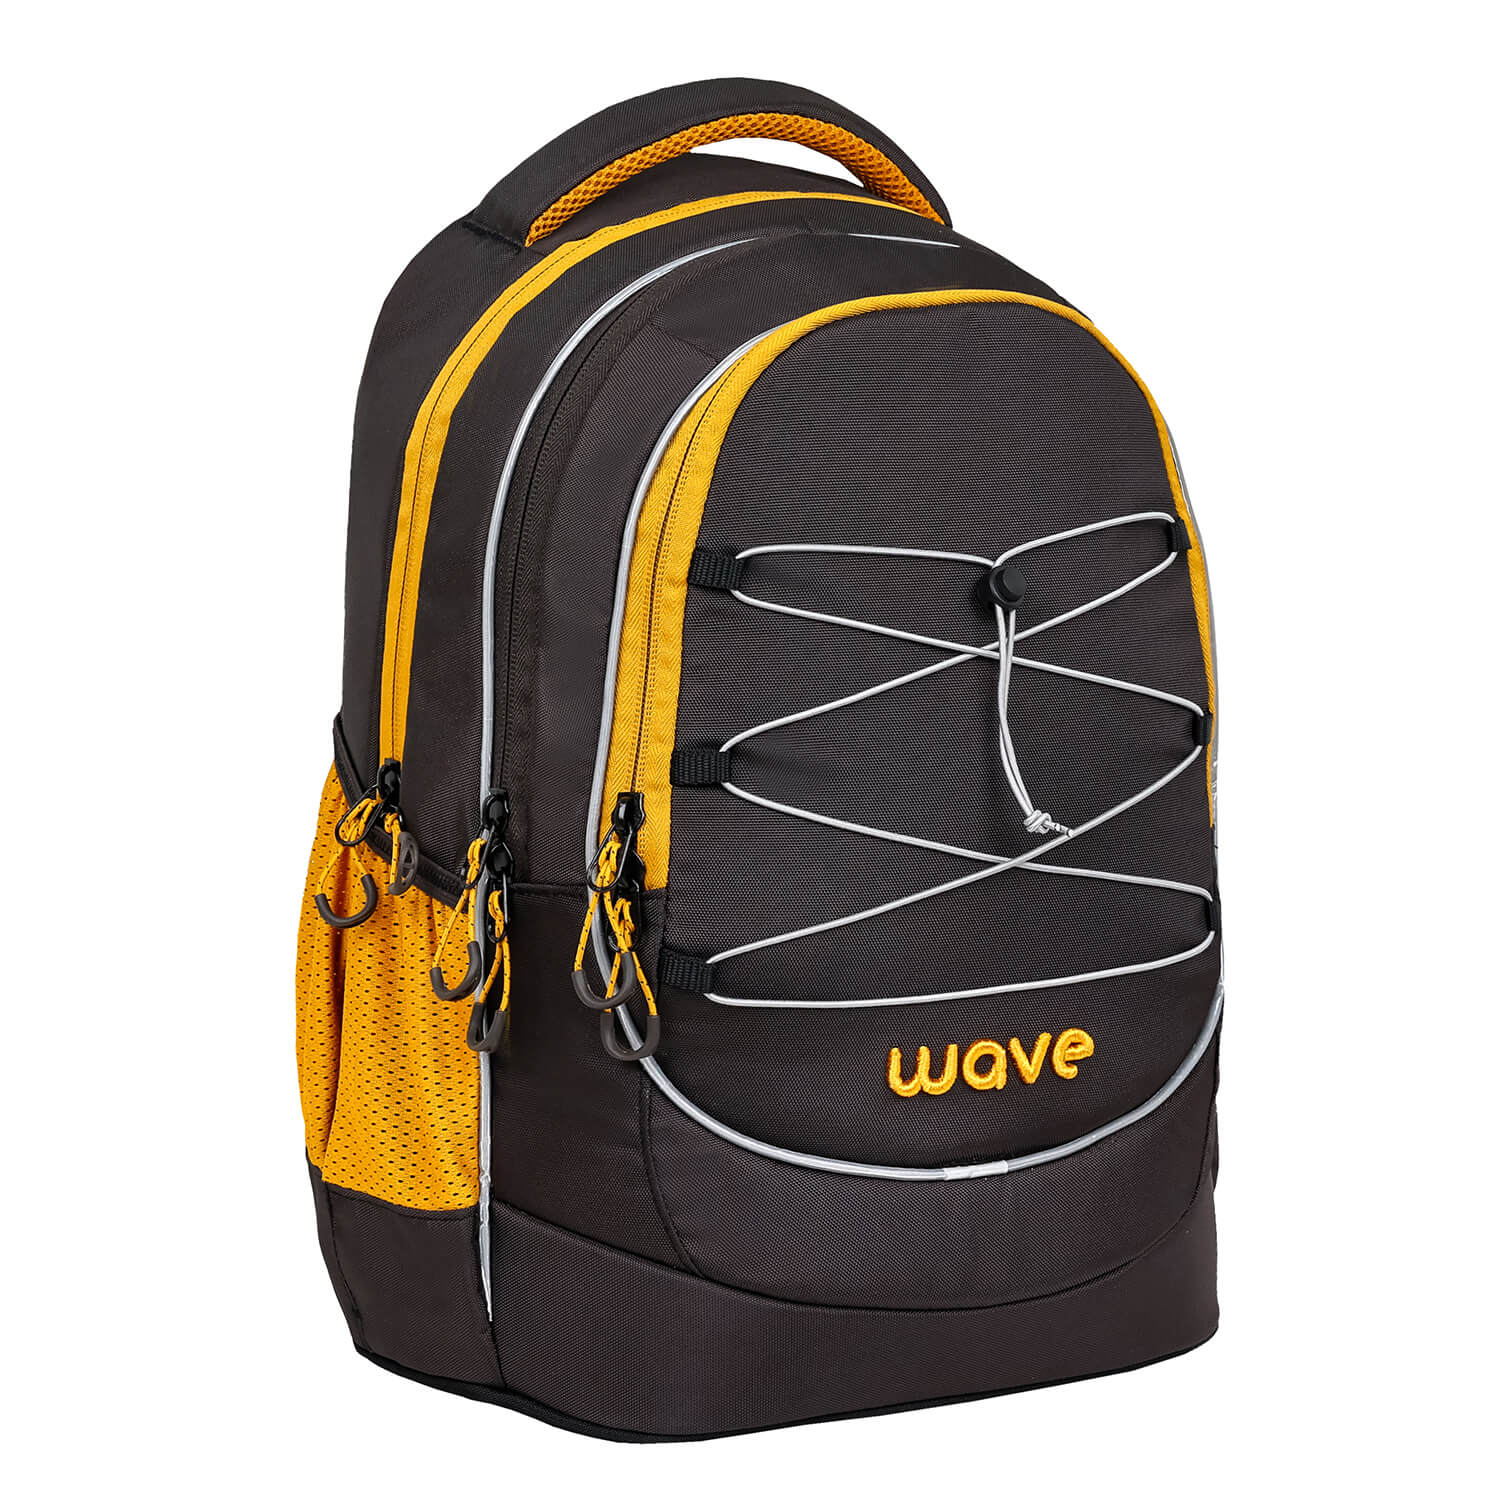 Wave Boost Sand school backpack